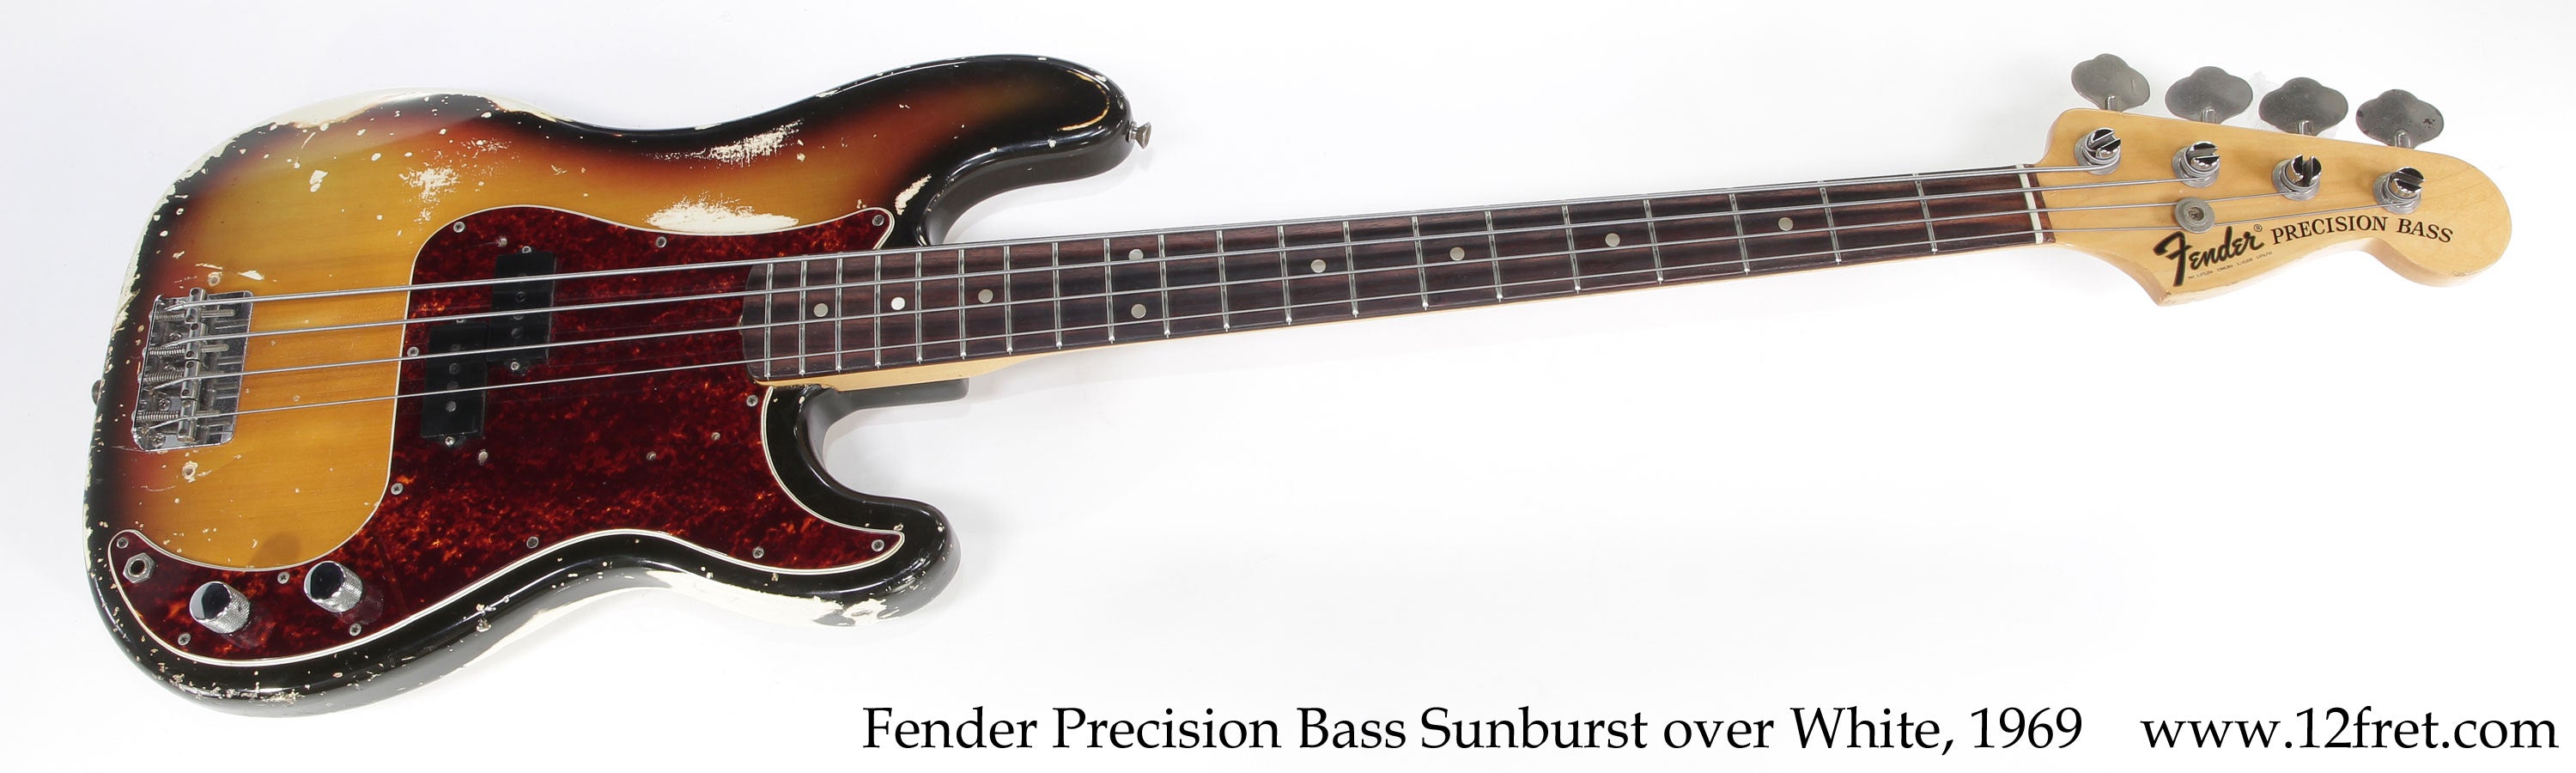 Fender Precision Bass Sunburst over White, 1969  - The Twelfth Fret